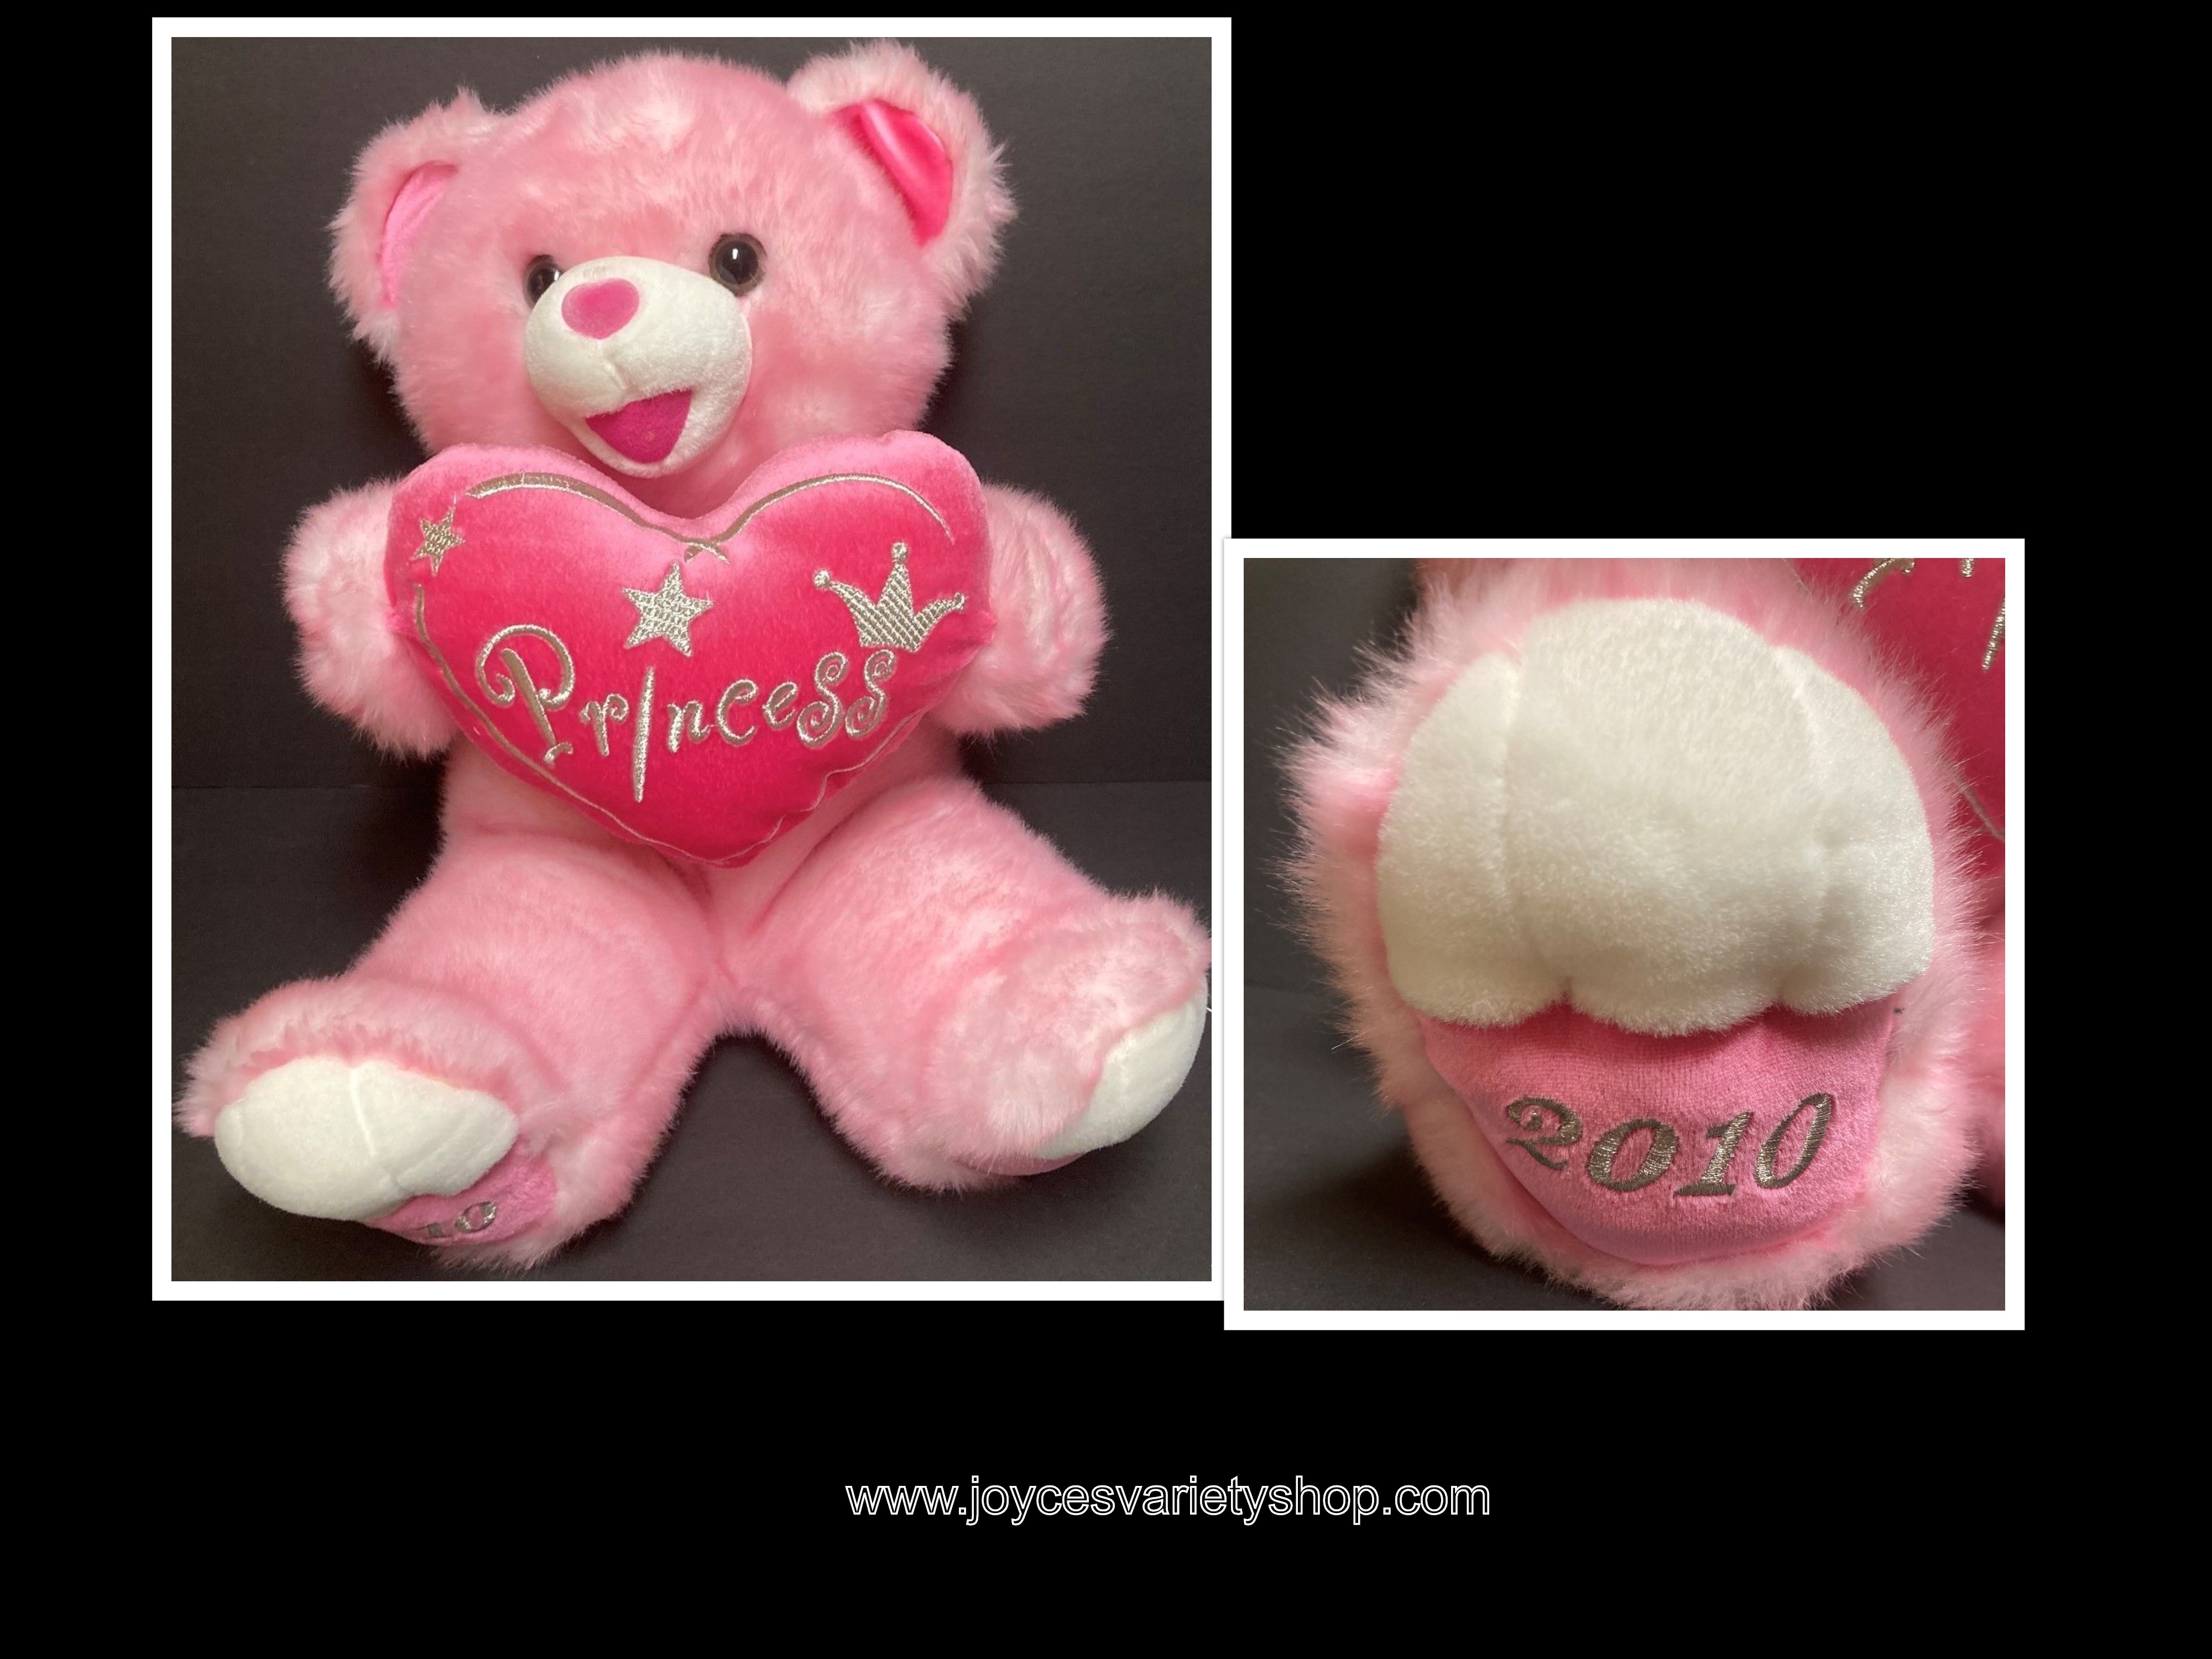 DanDee Teddy Bear Hot Pink Heart 2010 Princess 19" Birthday Anniversary